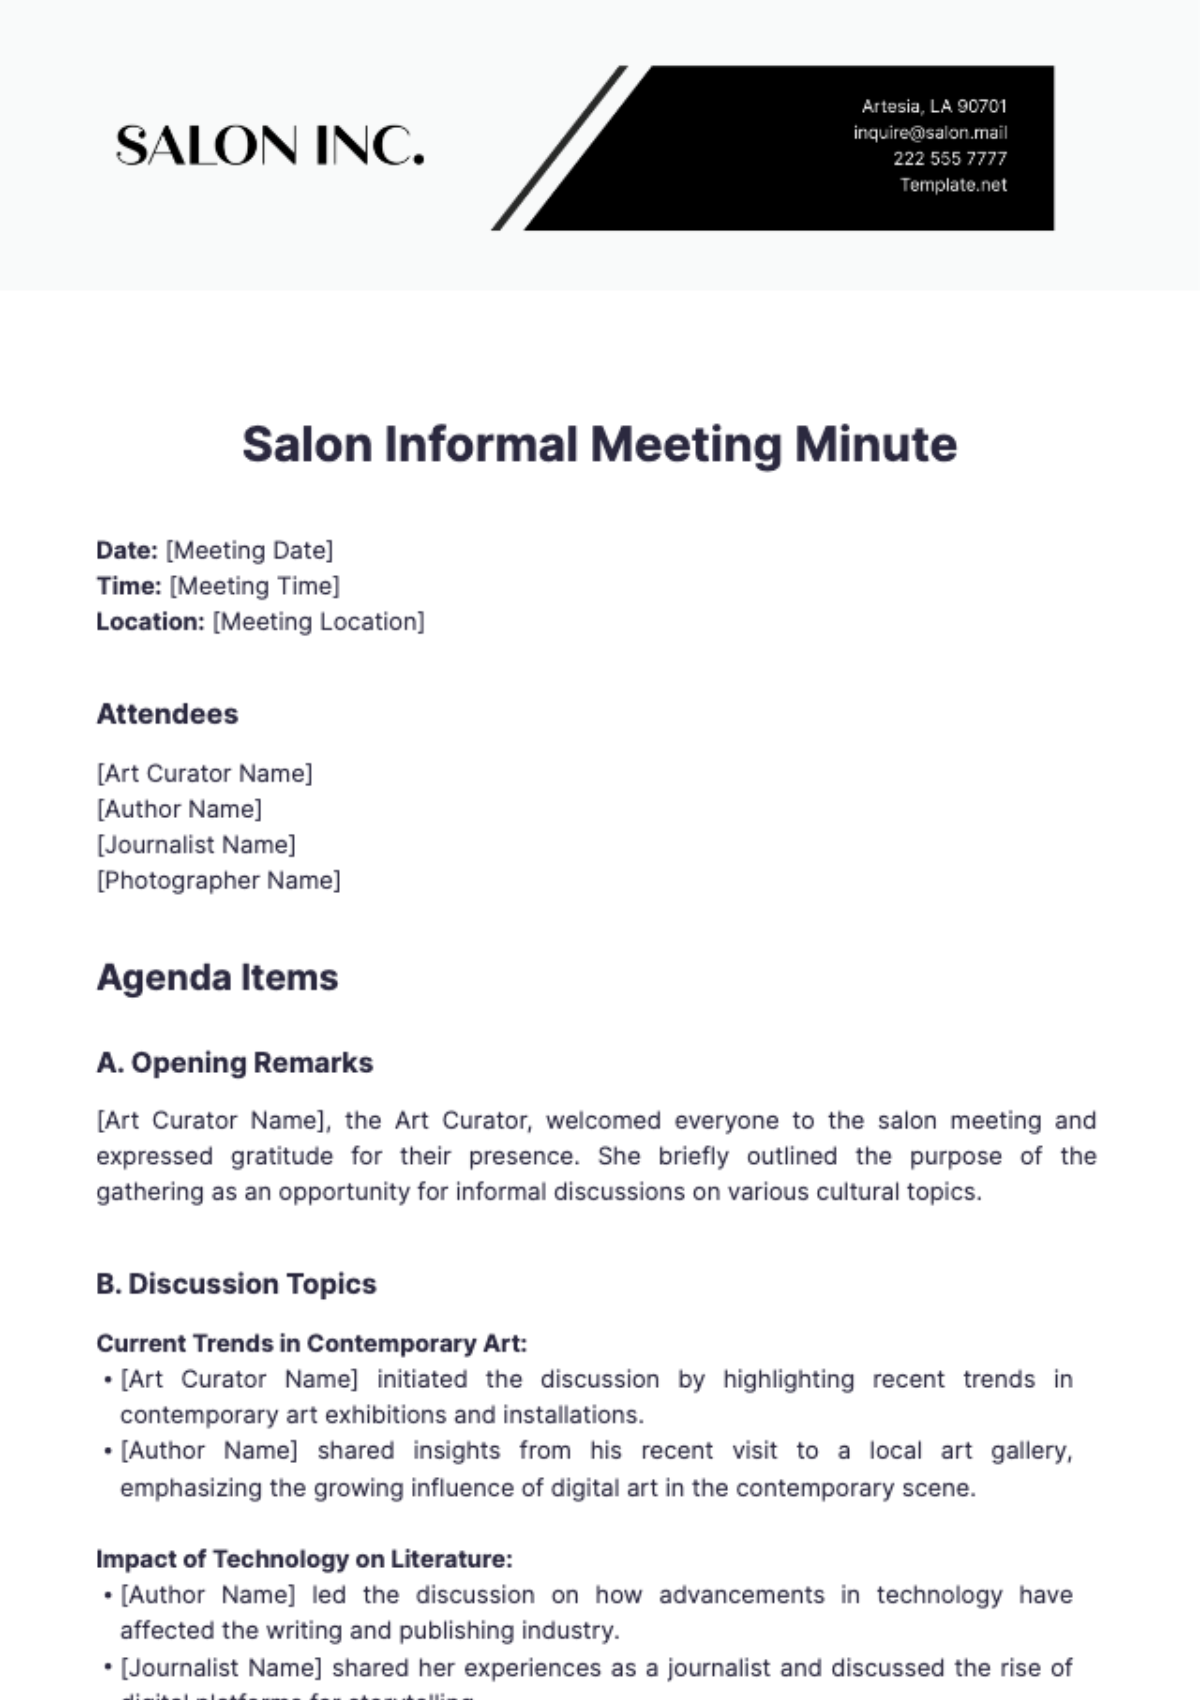 Free Salon Informal Meeting Minute Template